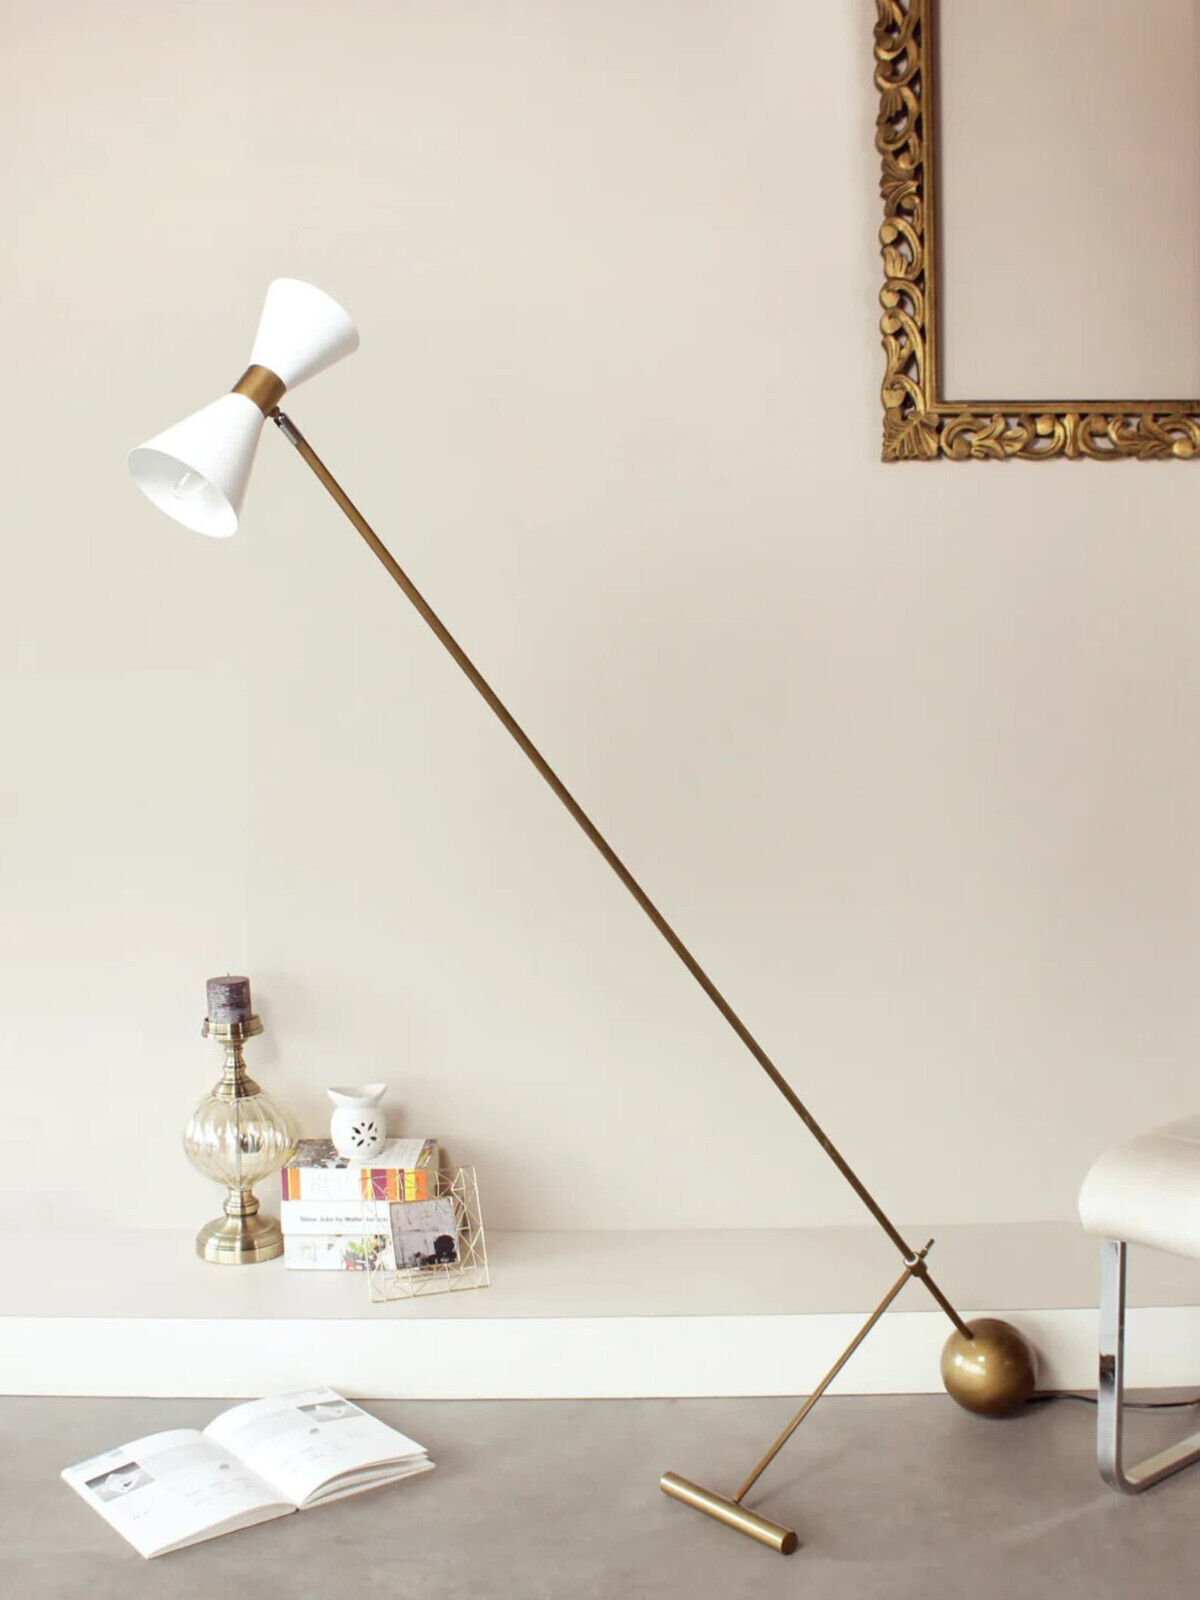 Vintage Brass Floor Lamp Italian Mid Century Modern Unique Rare Ball Design Base